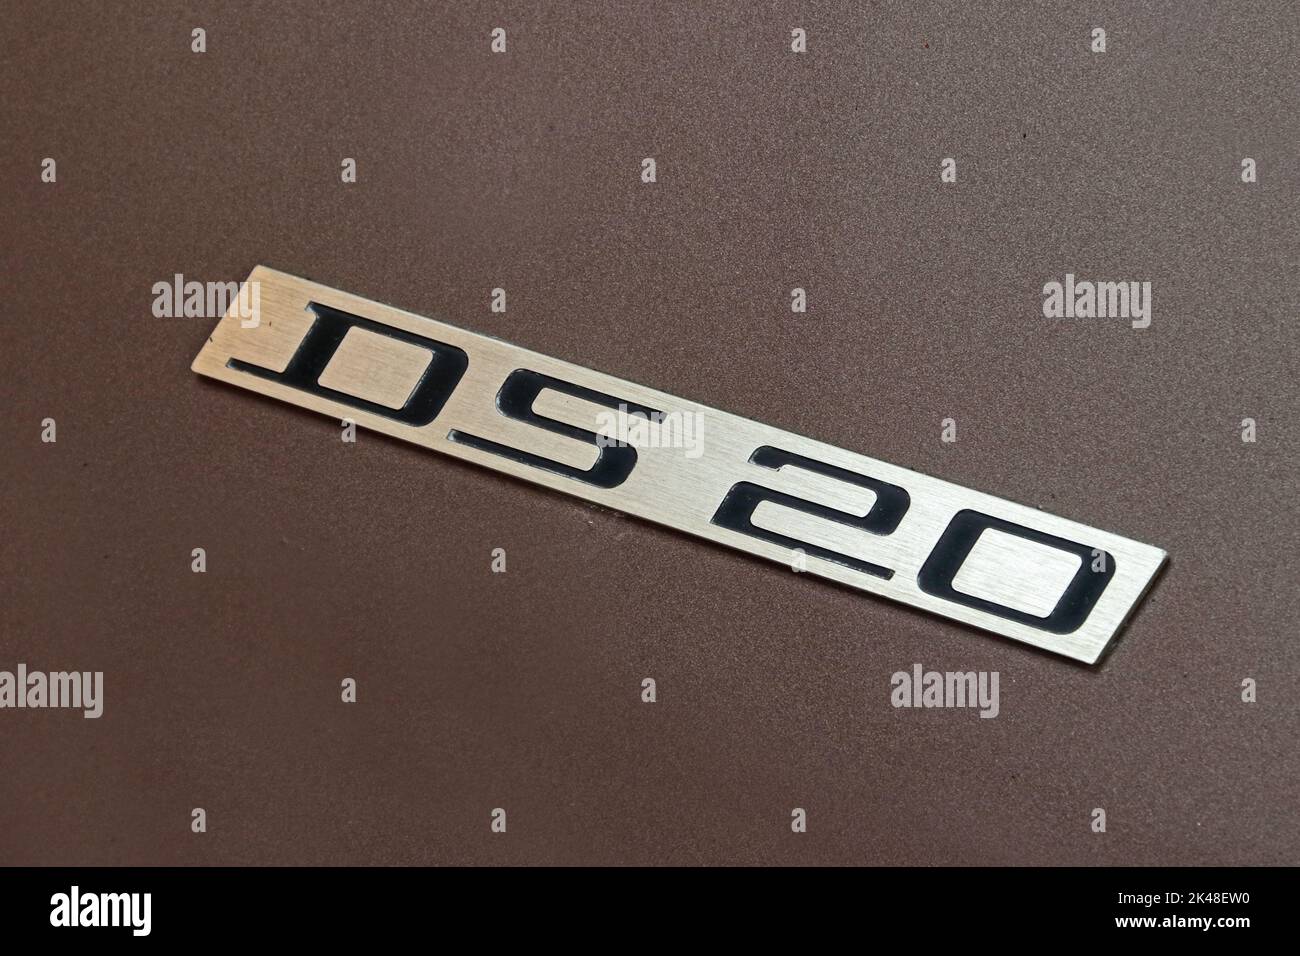 DS 20 badge on rear of Citroen car Stock Photo